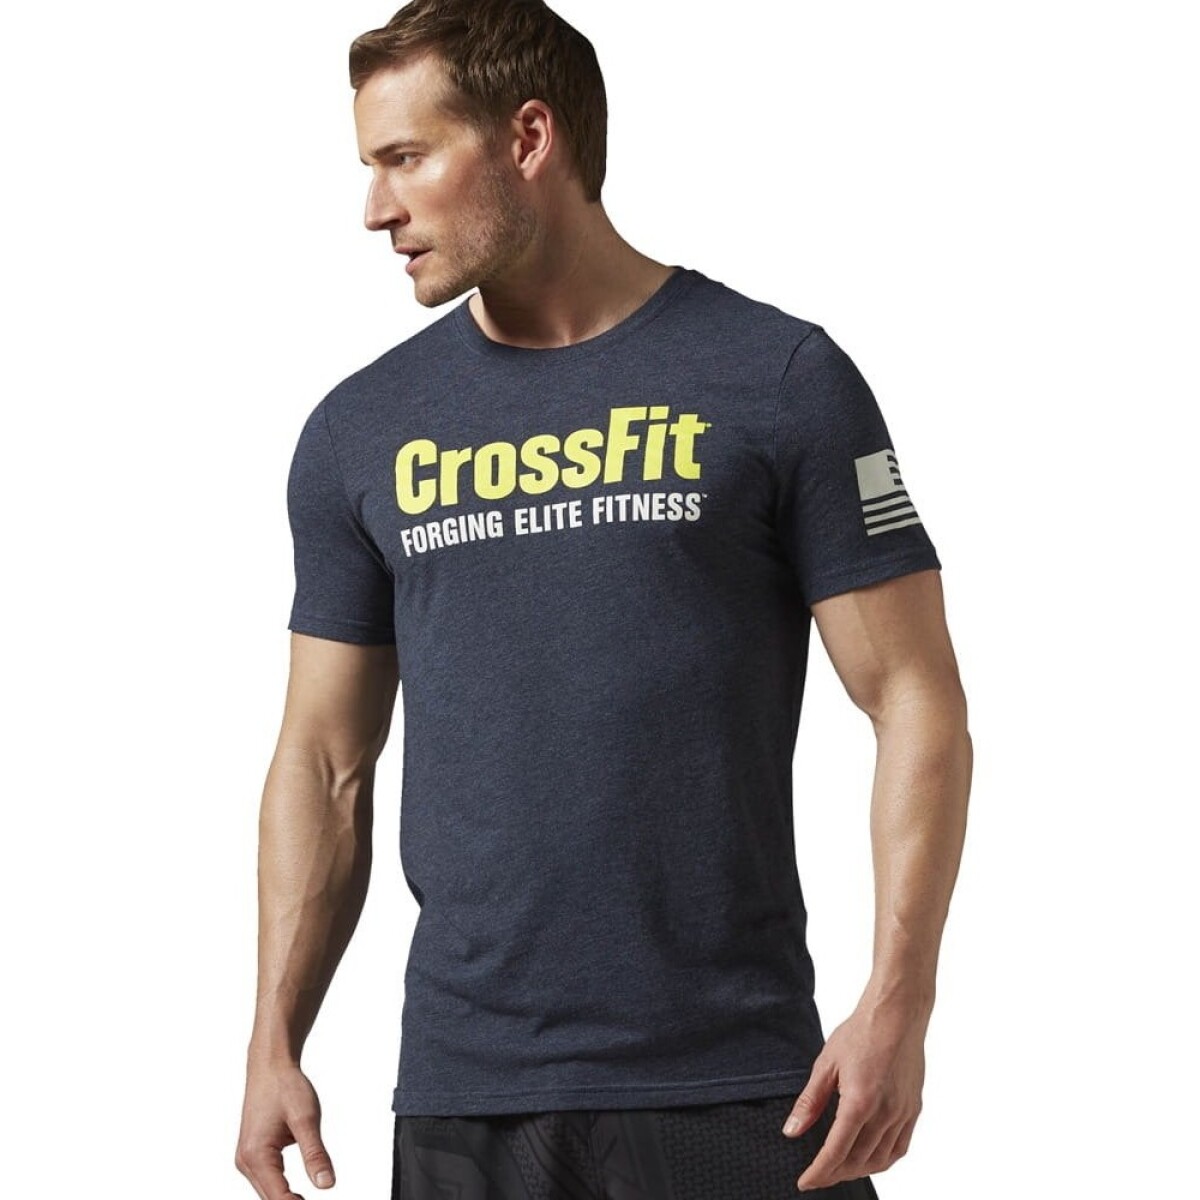 Remera Reebok Para Hombre Deportiva Crossfit Forging Fitness - Gris Oscuro 